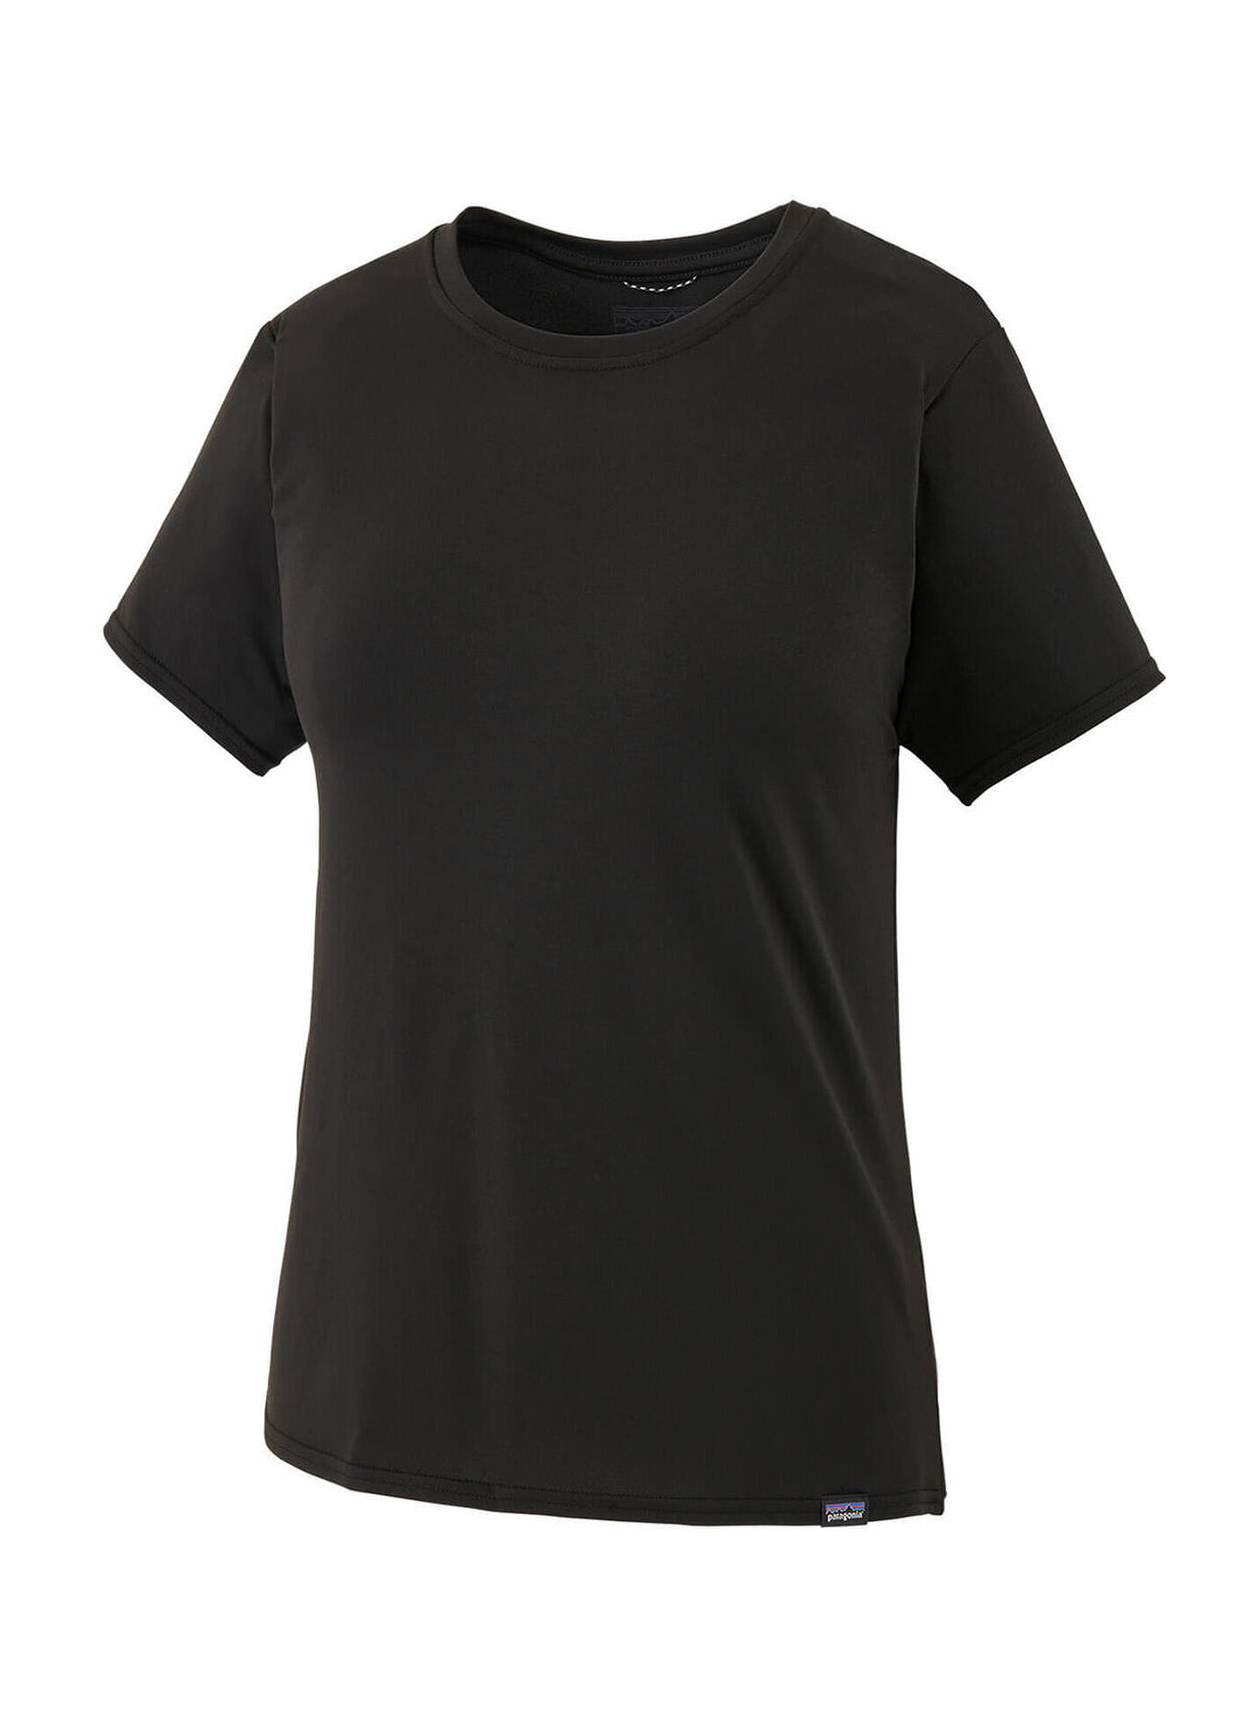 Patagonia Women's Black Cap Cool Daily T-Shirt